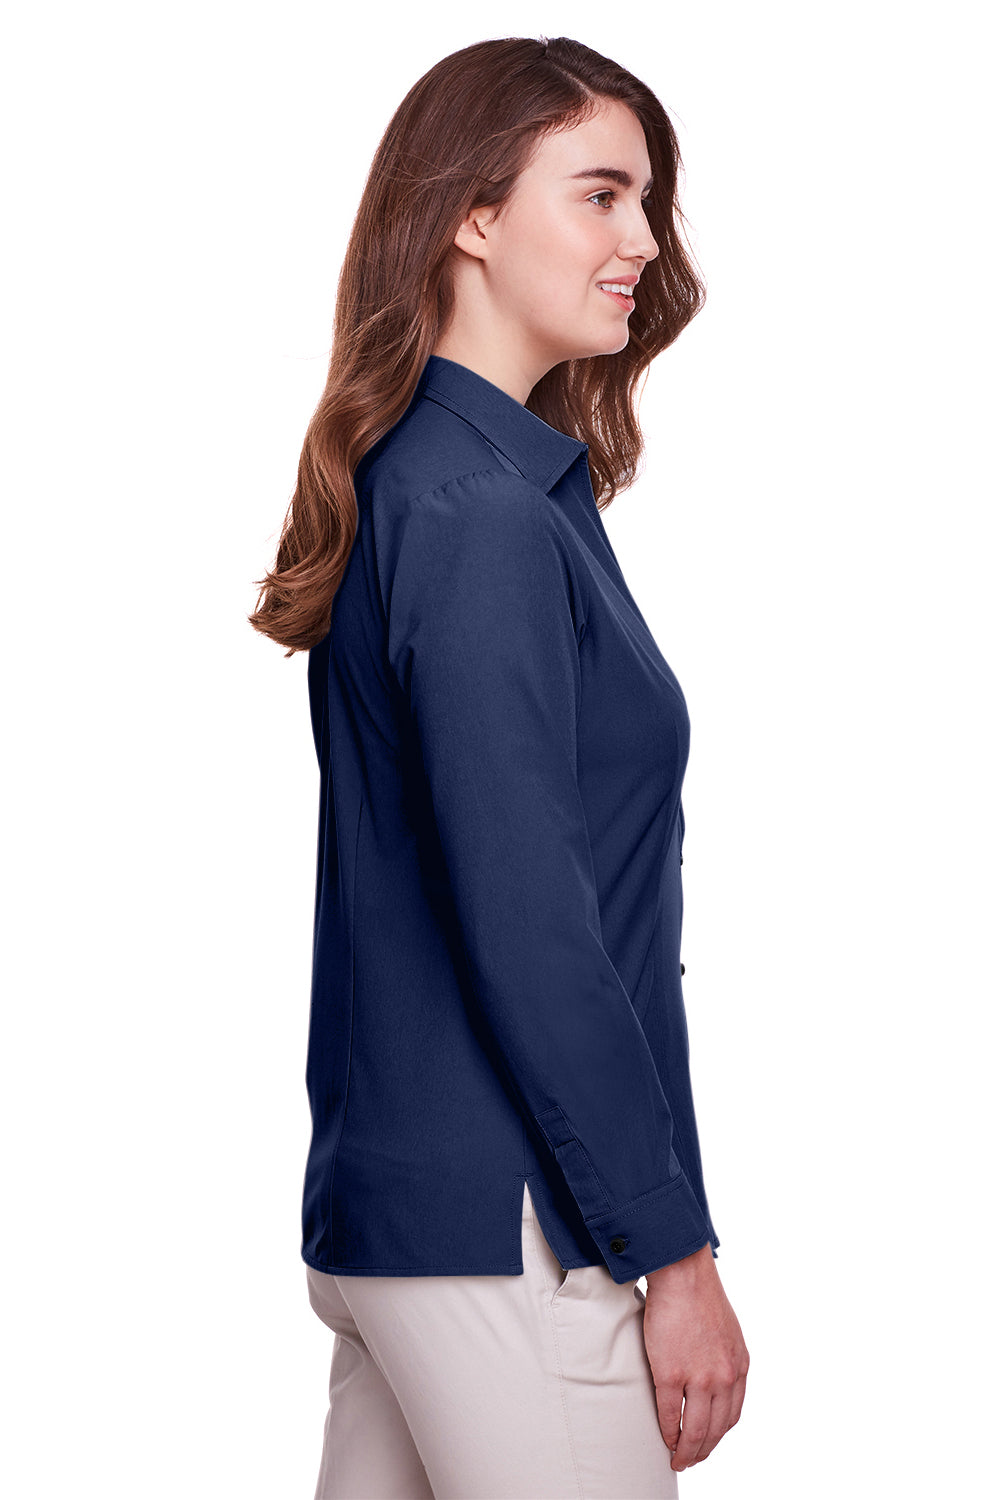 UltraClub UC500W Womens Bradley Performance Moisture Wicking Long Sleeve Button Down Shirt Navy Blue Side